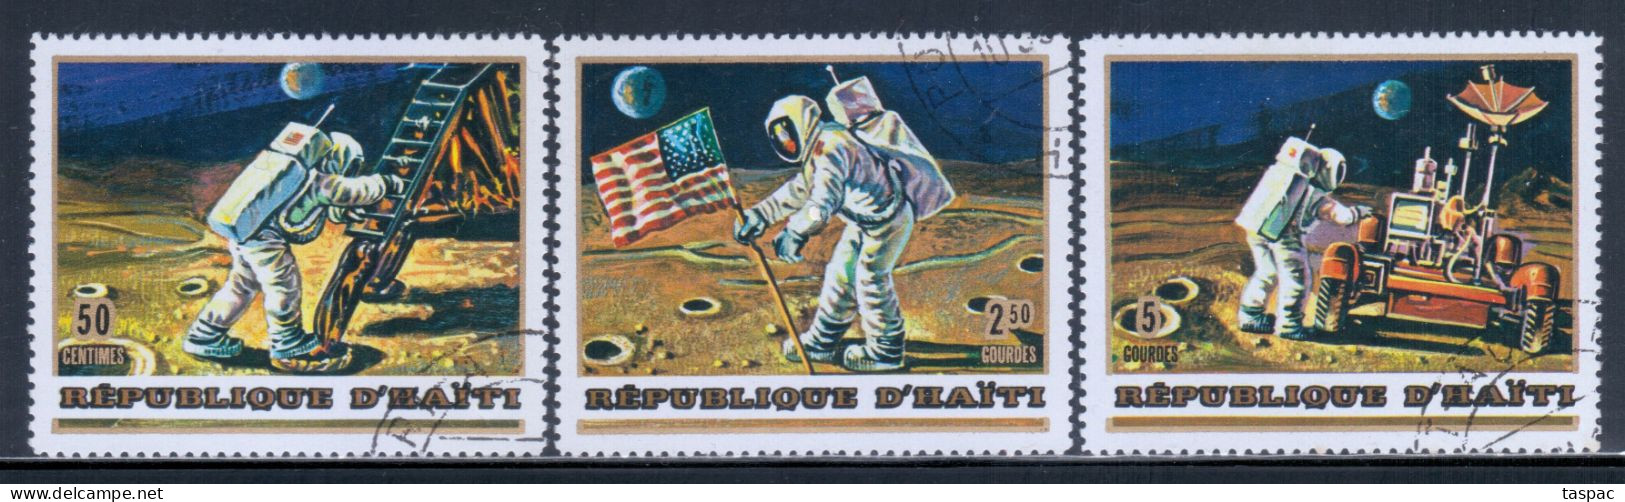 Haiti 1973 Mi# Not Listed - Unofficial Set Of 3 Used - Apollo / Space - Haiti